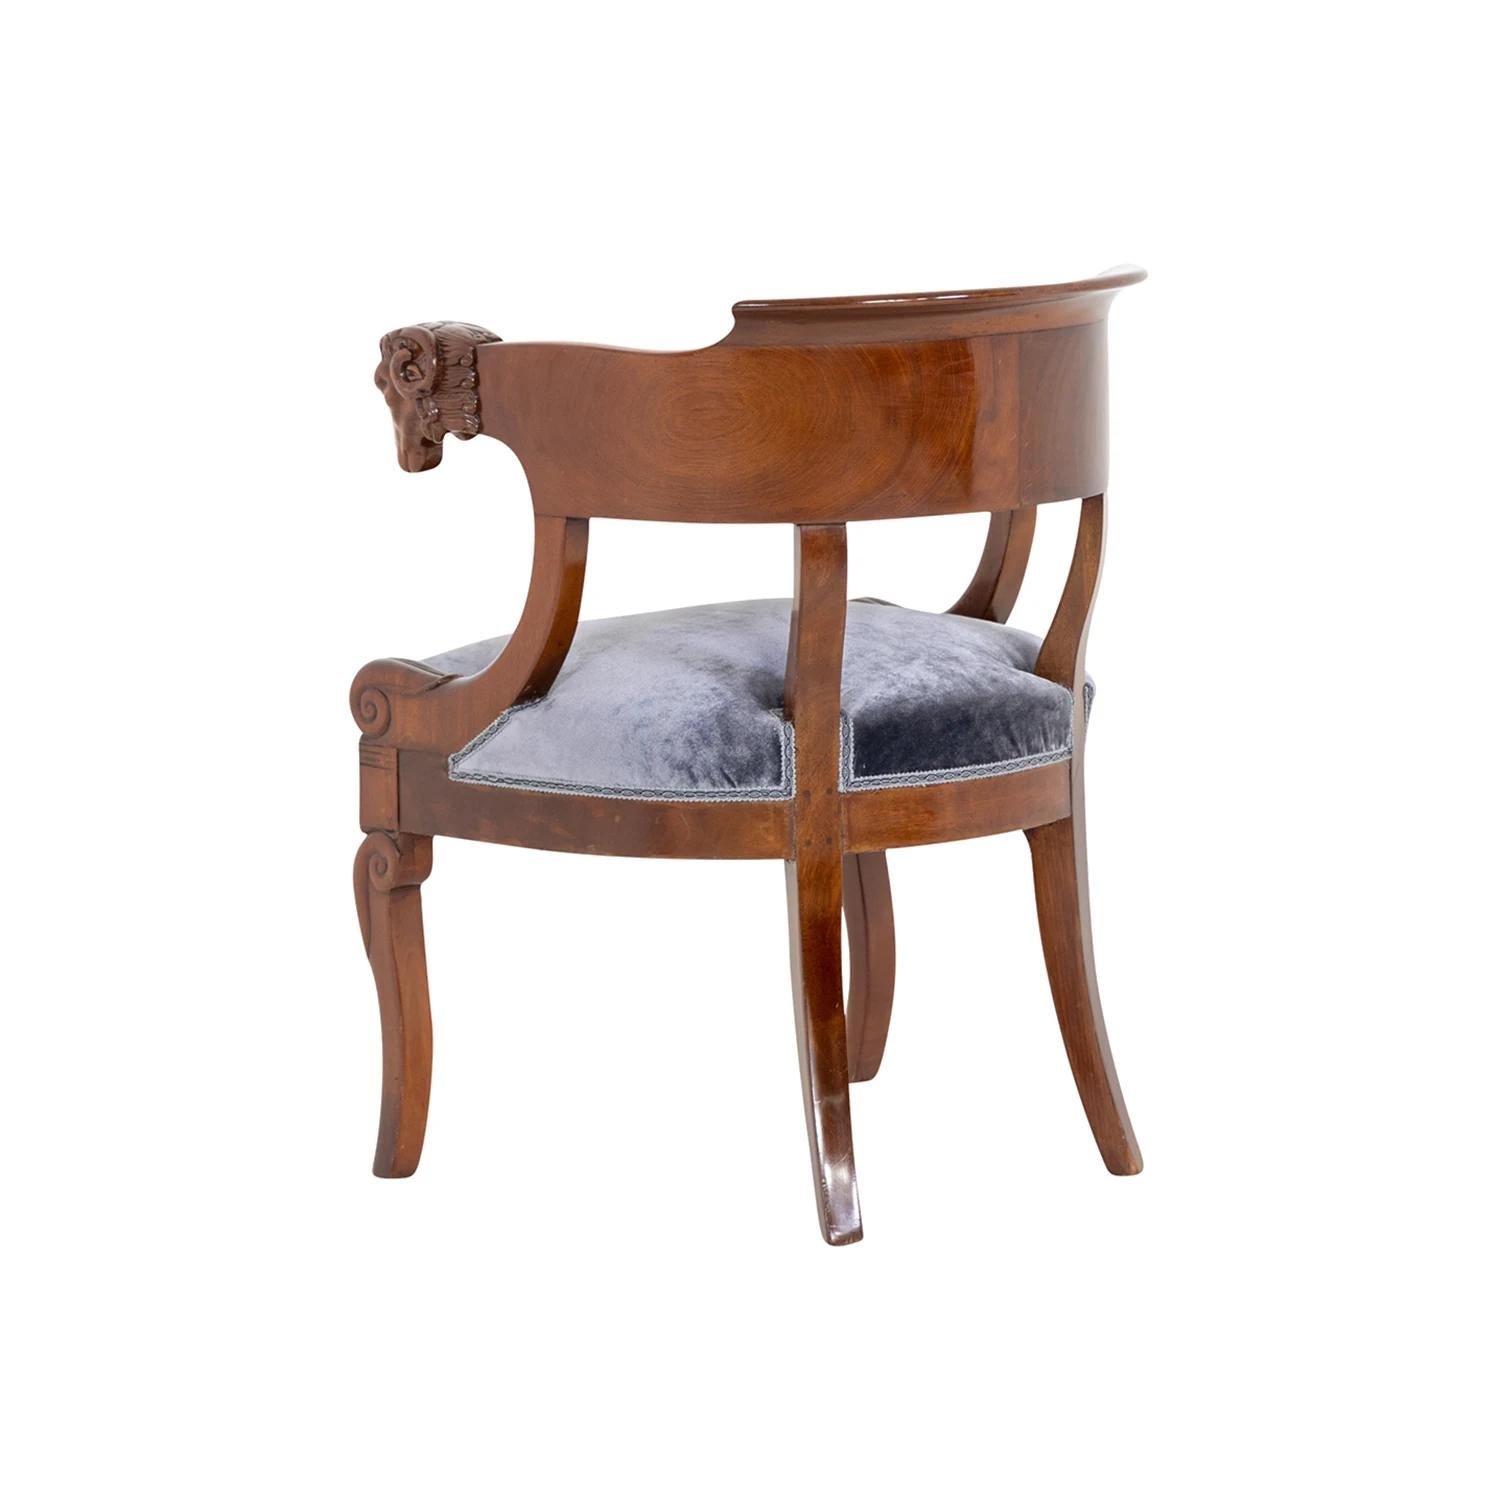 19th Century German Biedermeier Polished Mahogany Armchair - Antique Side Chair For Sale 3